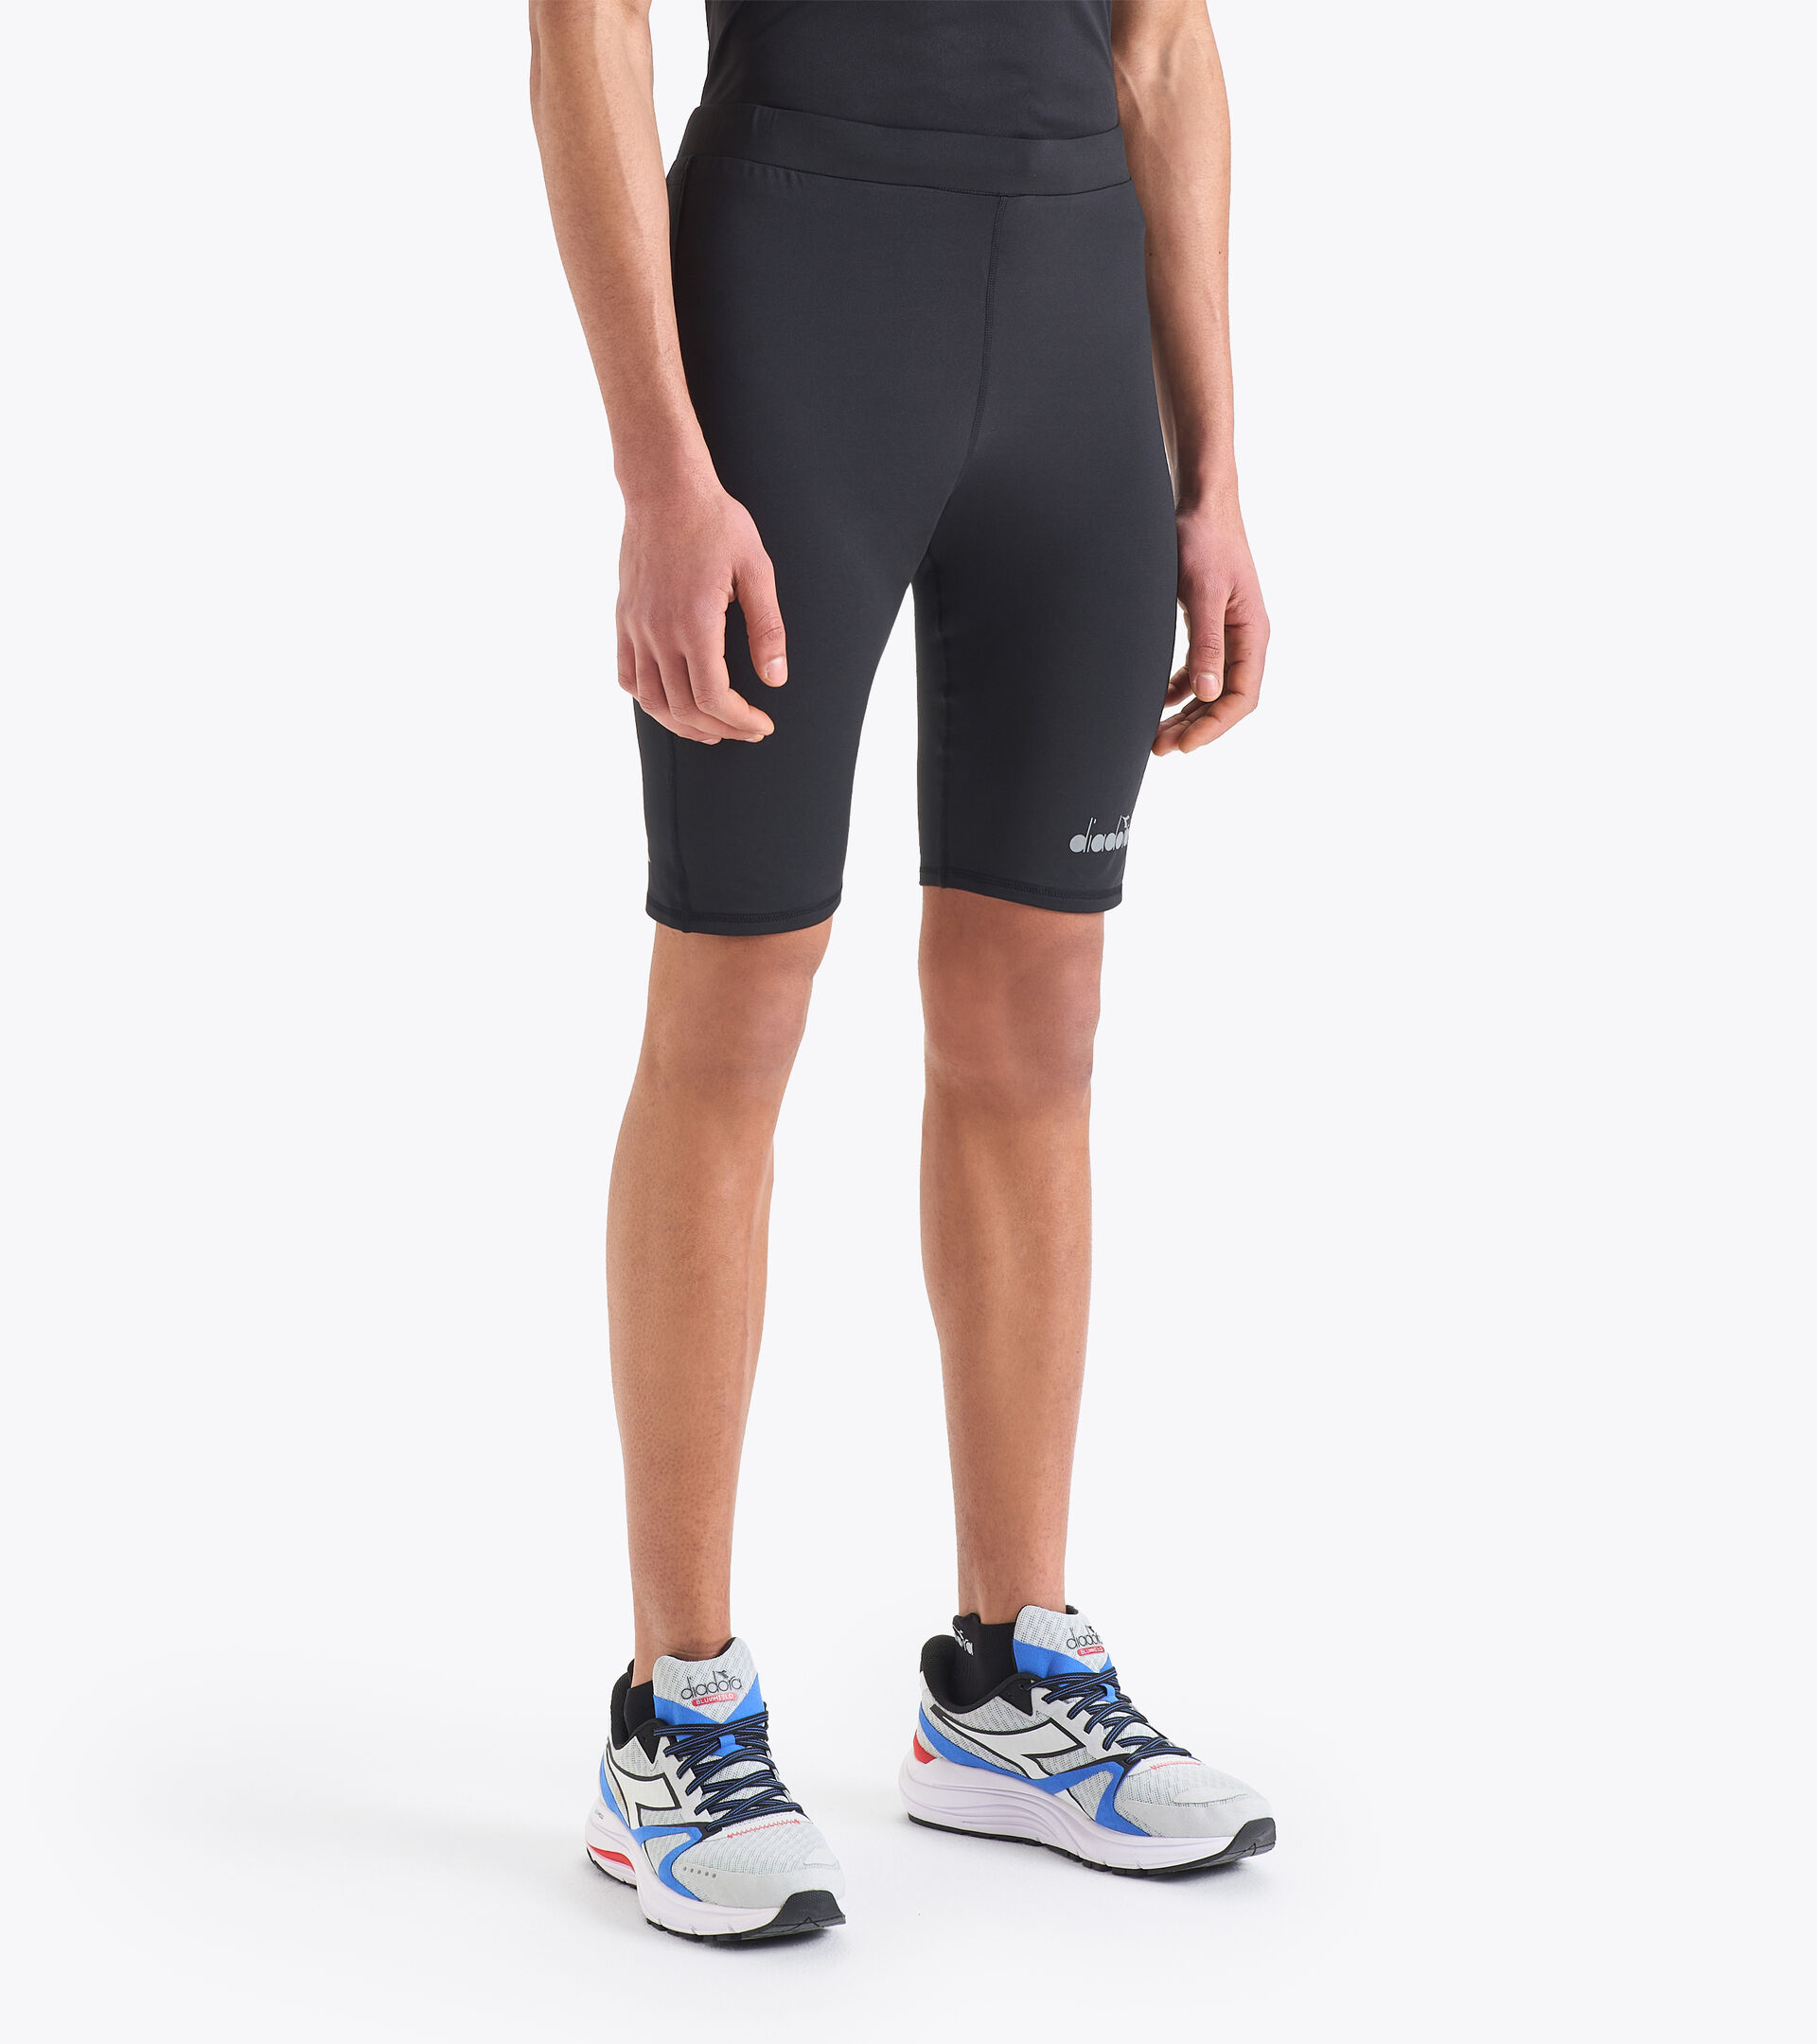 Shorts para correr - Hombre SHORT TIGHTS NEGRO - Diadora